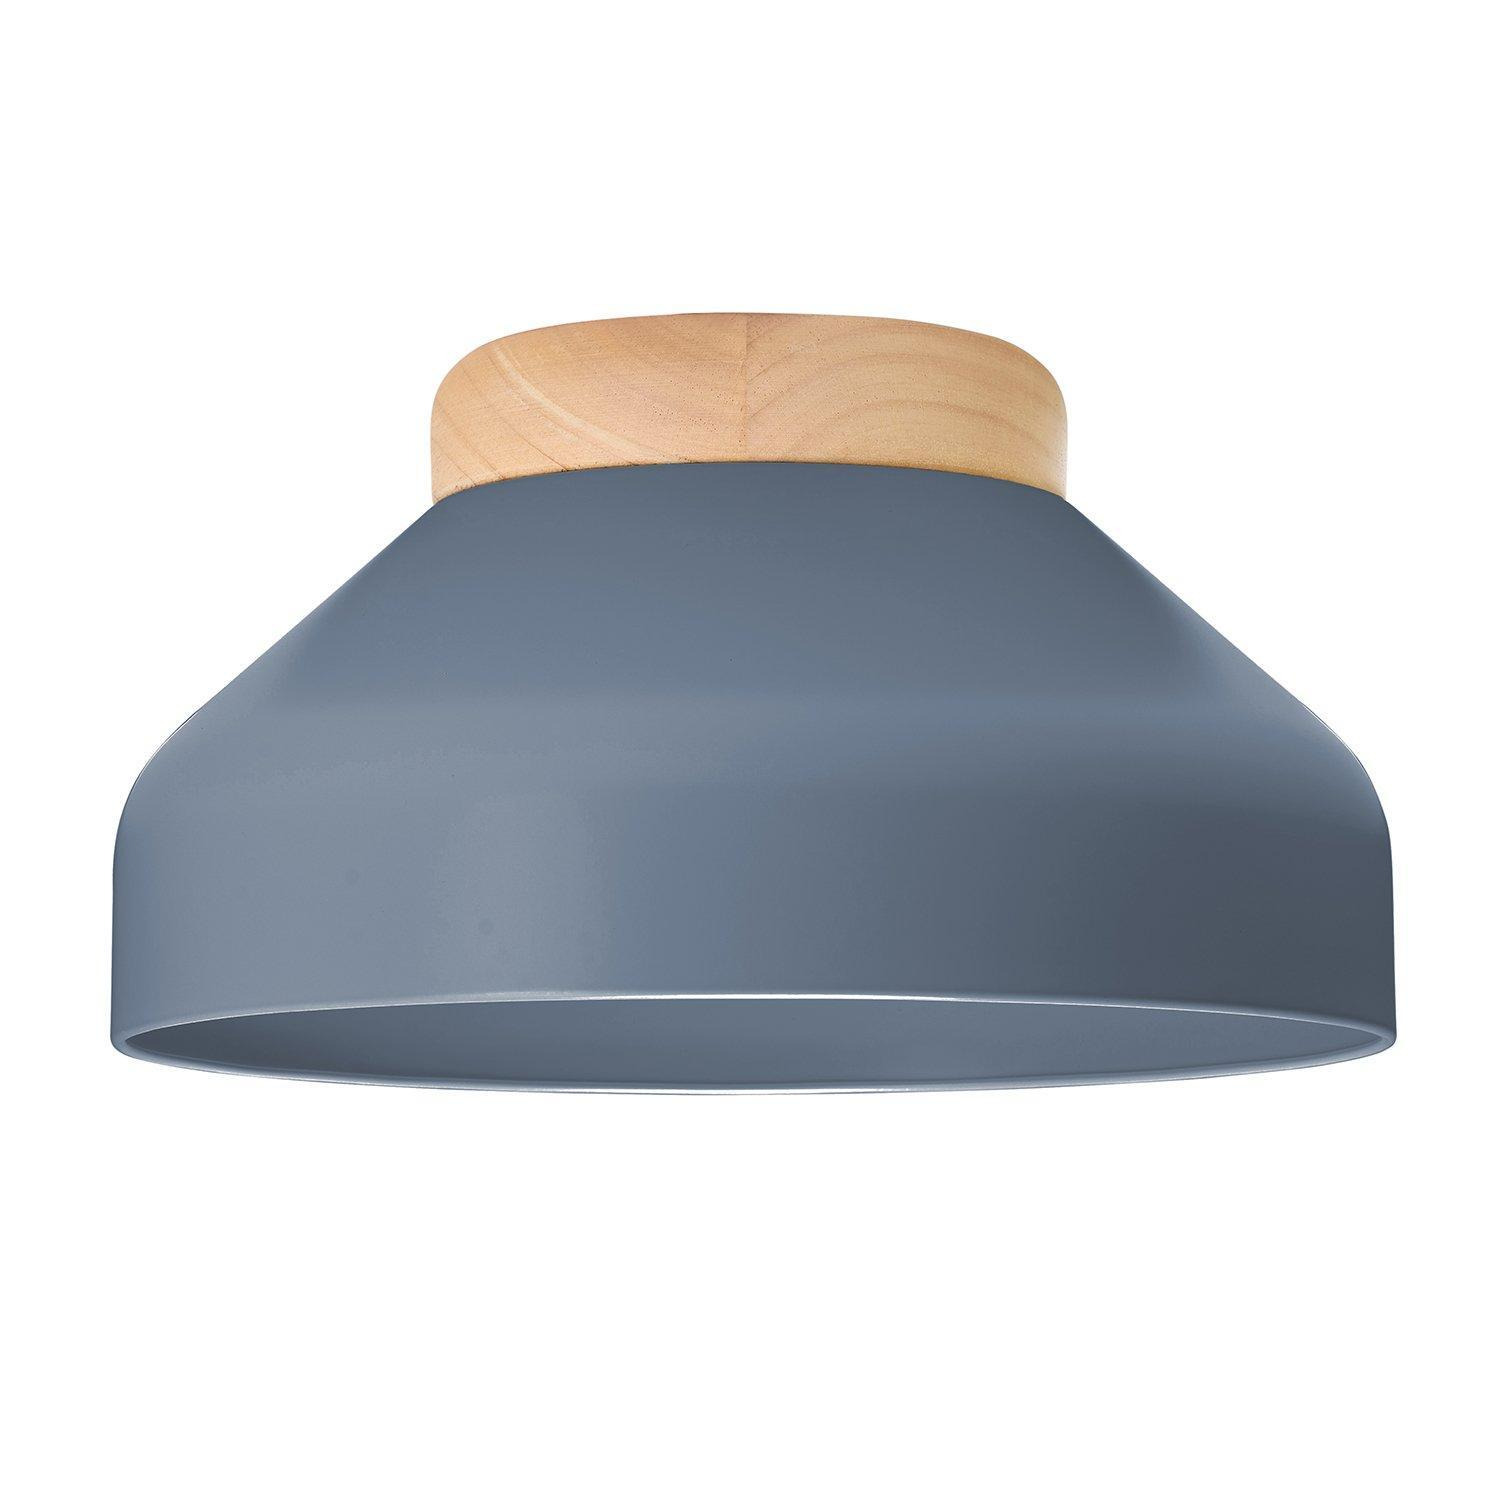 Contemporary Scandinavian Designed Semi Flush Ceiling Light Fitting - image 1